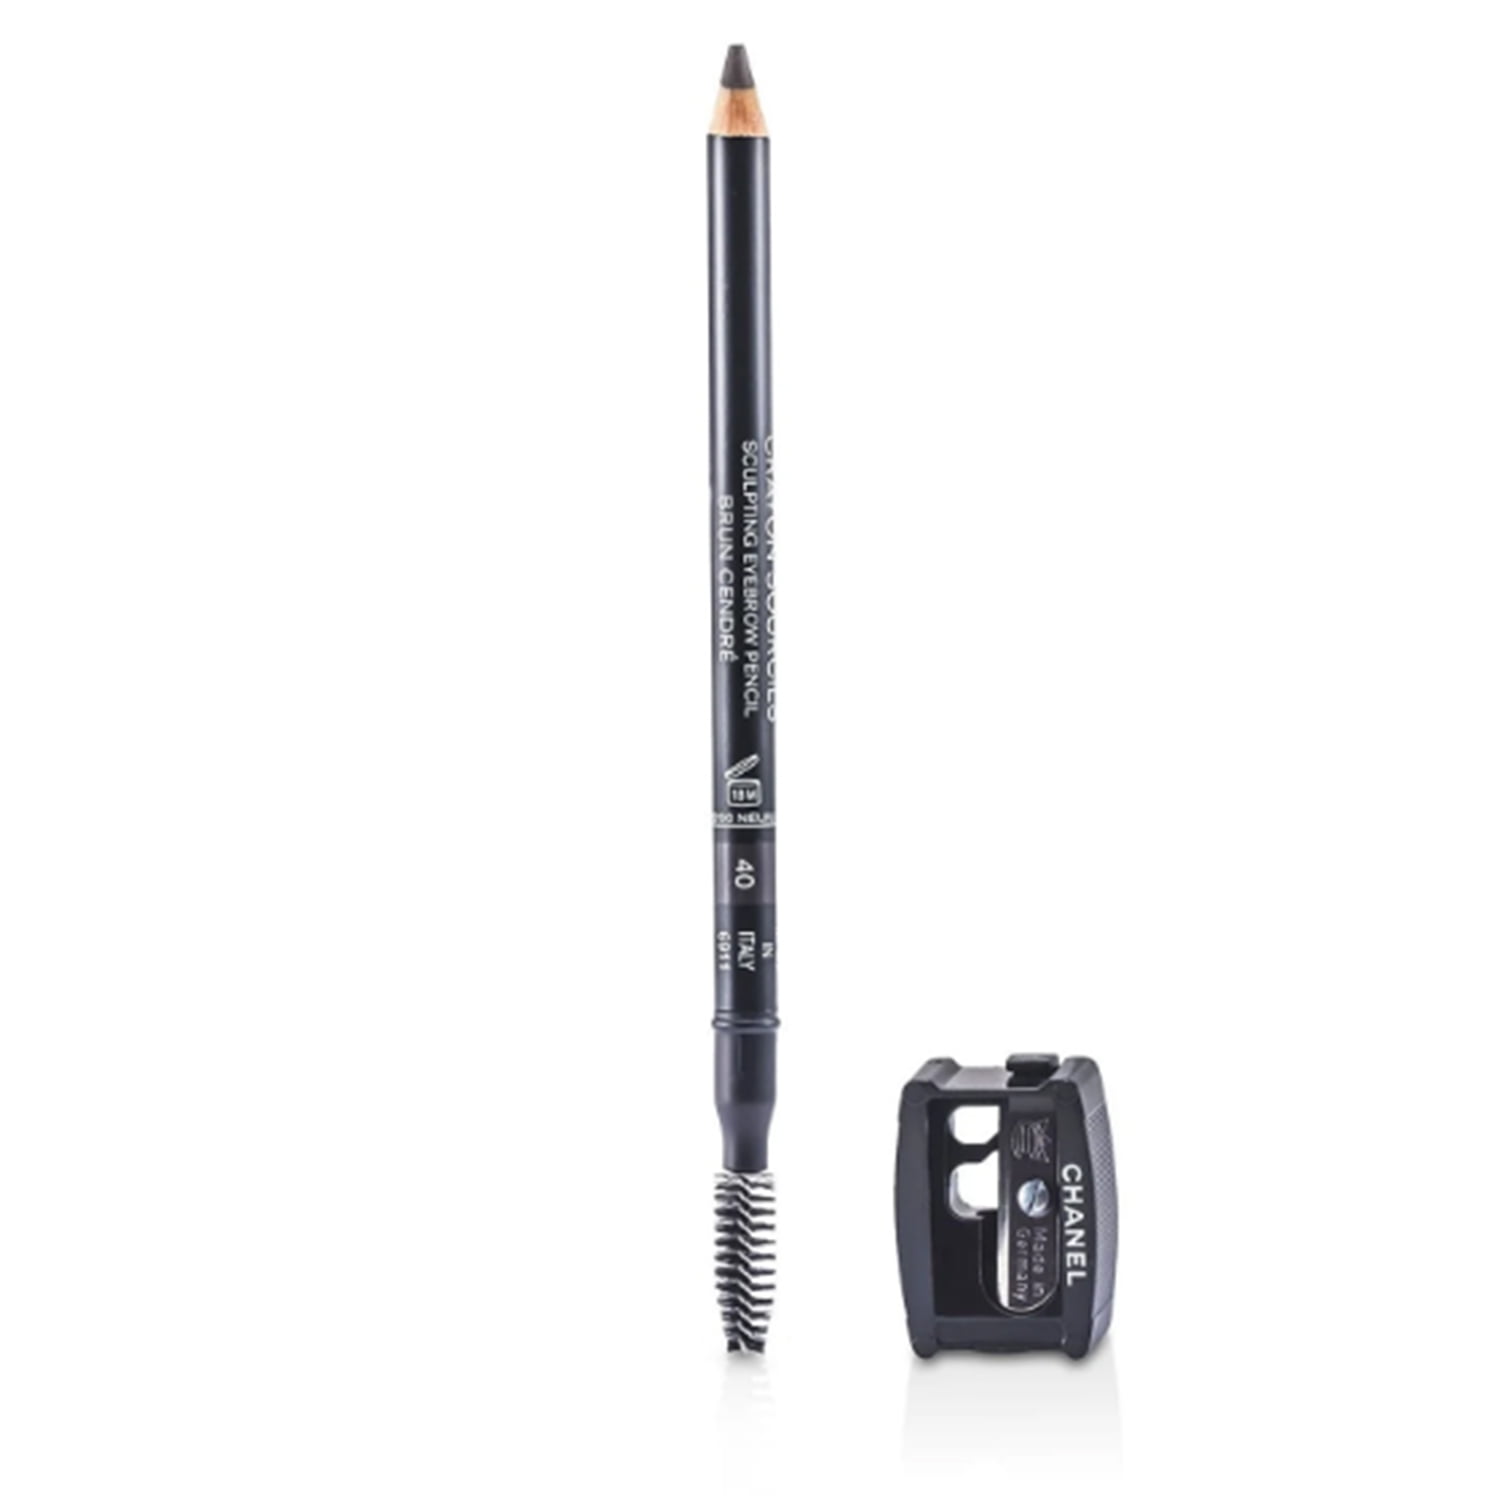 Chanel Crayon Sourcils Sculpting Eyebrow Pencil 40 Brun Cendre